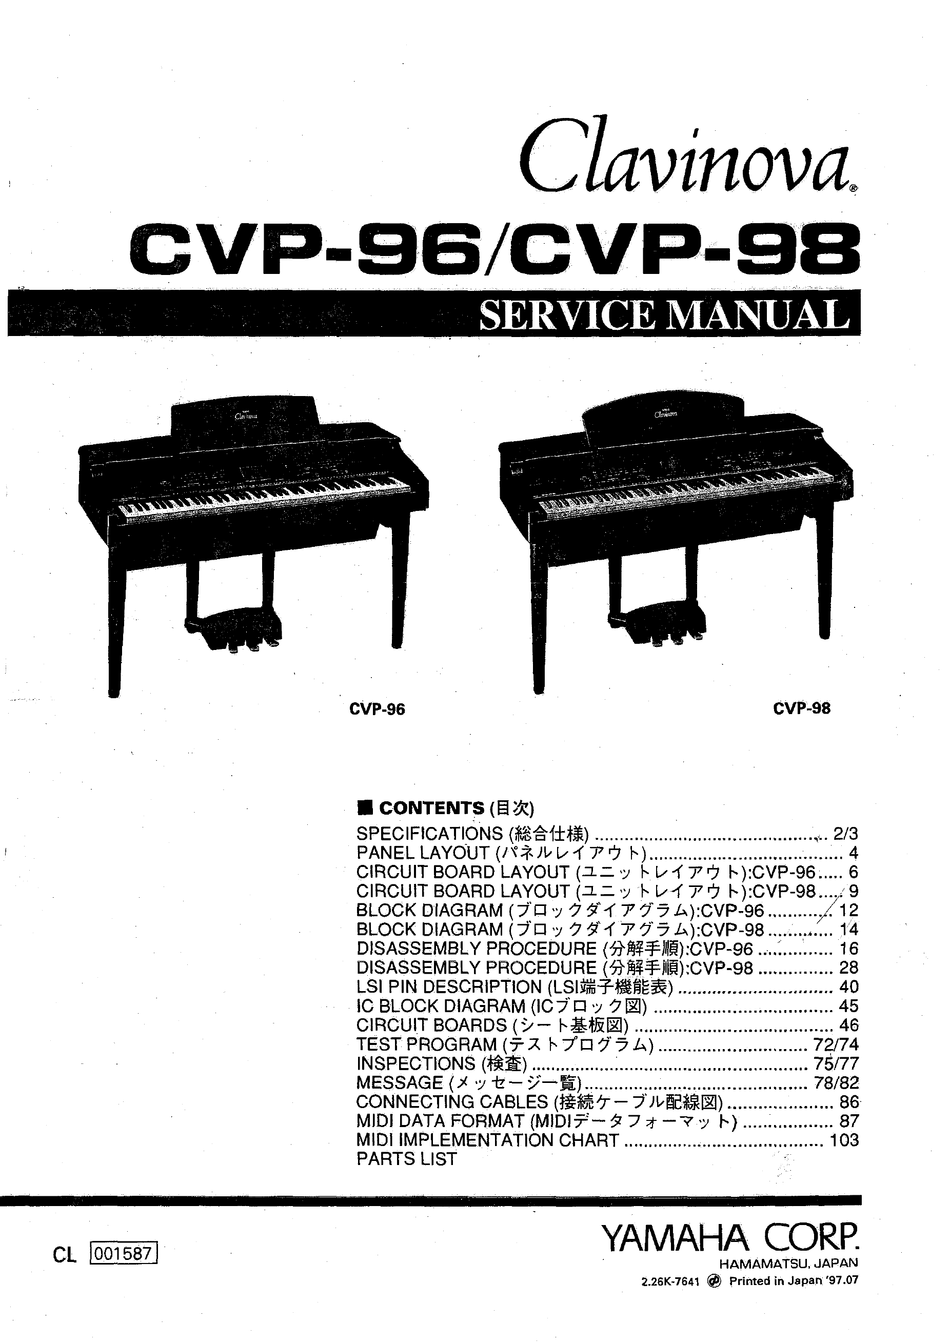 YAMAHA CLAVINOVA CVP-96 SERVICE MANUAL Pdf Download | ManualsLib